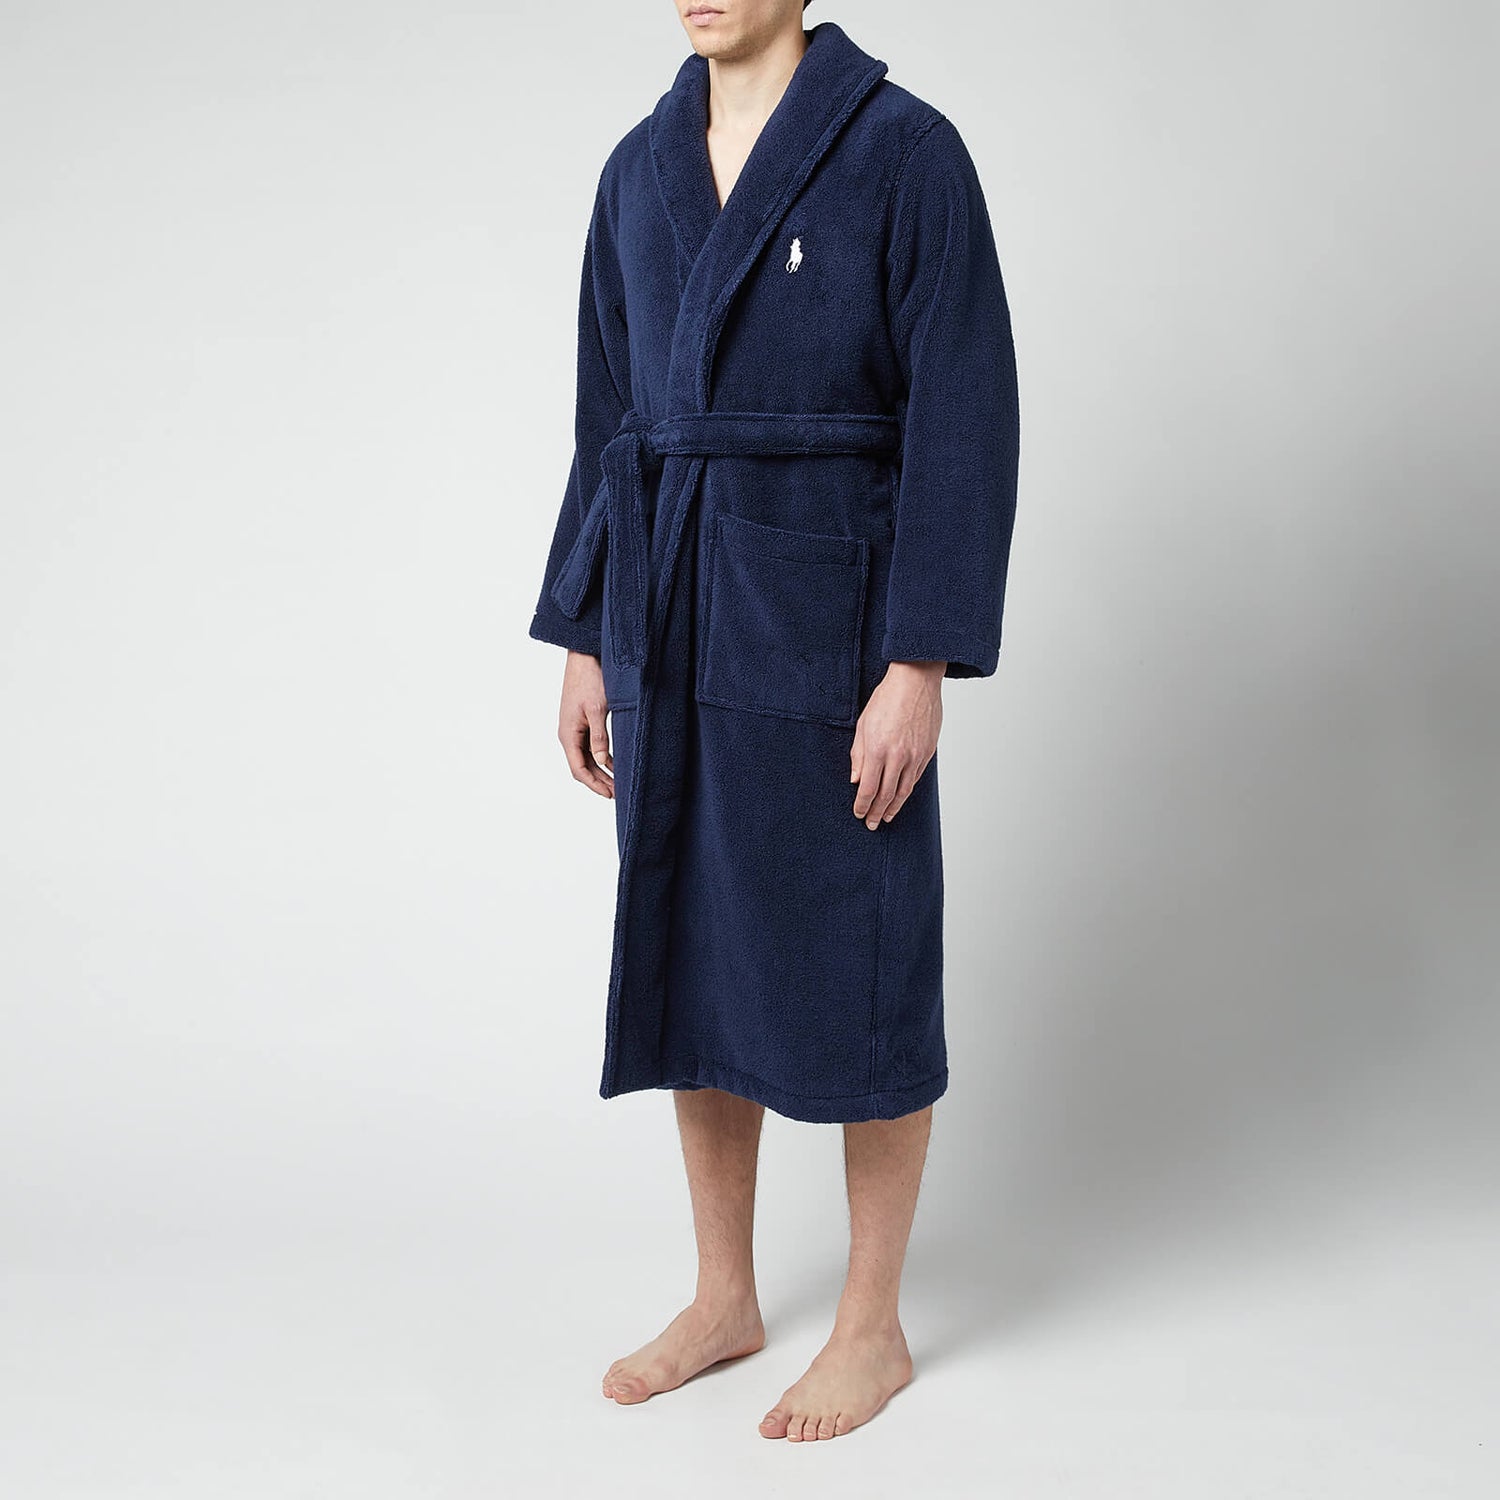 Polo Ralph Lauren Men's Kimono Dressing Gown - Cruise Navy - S/M